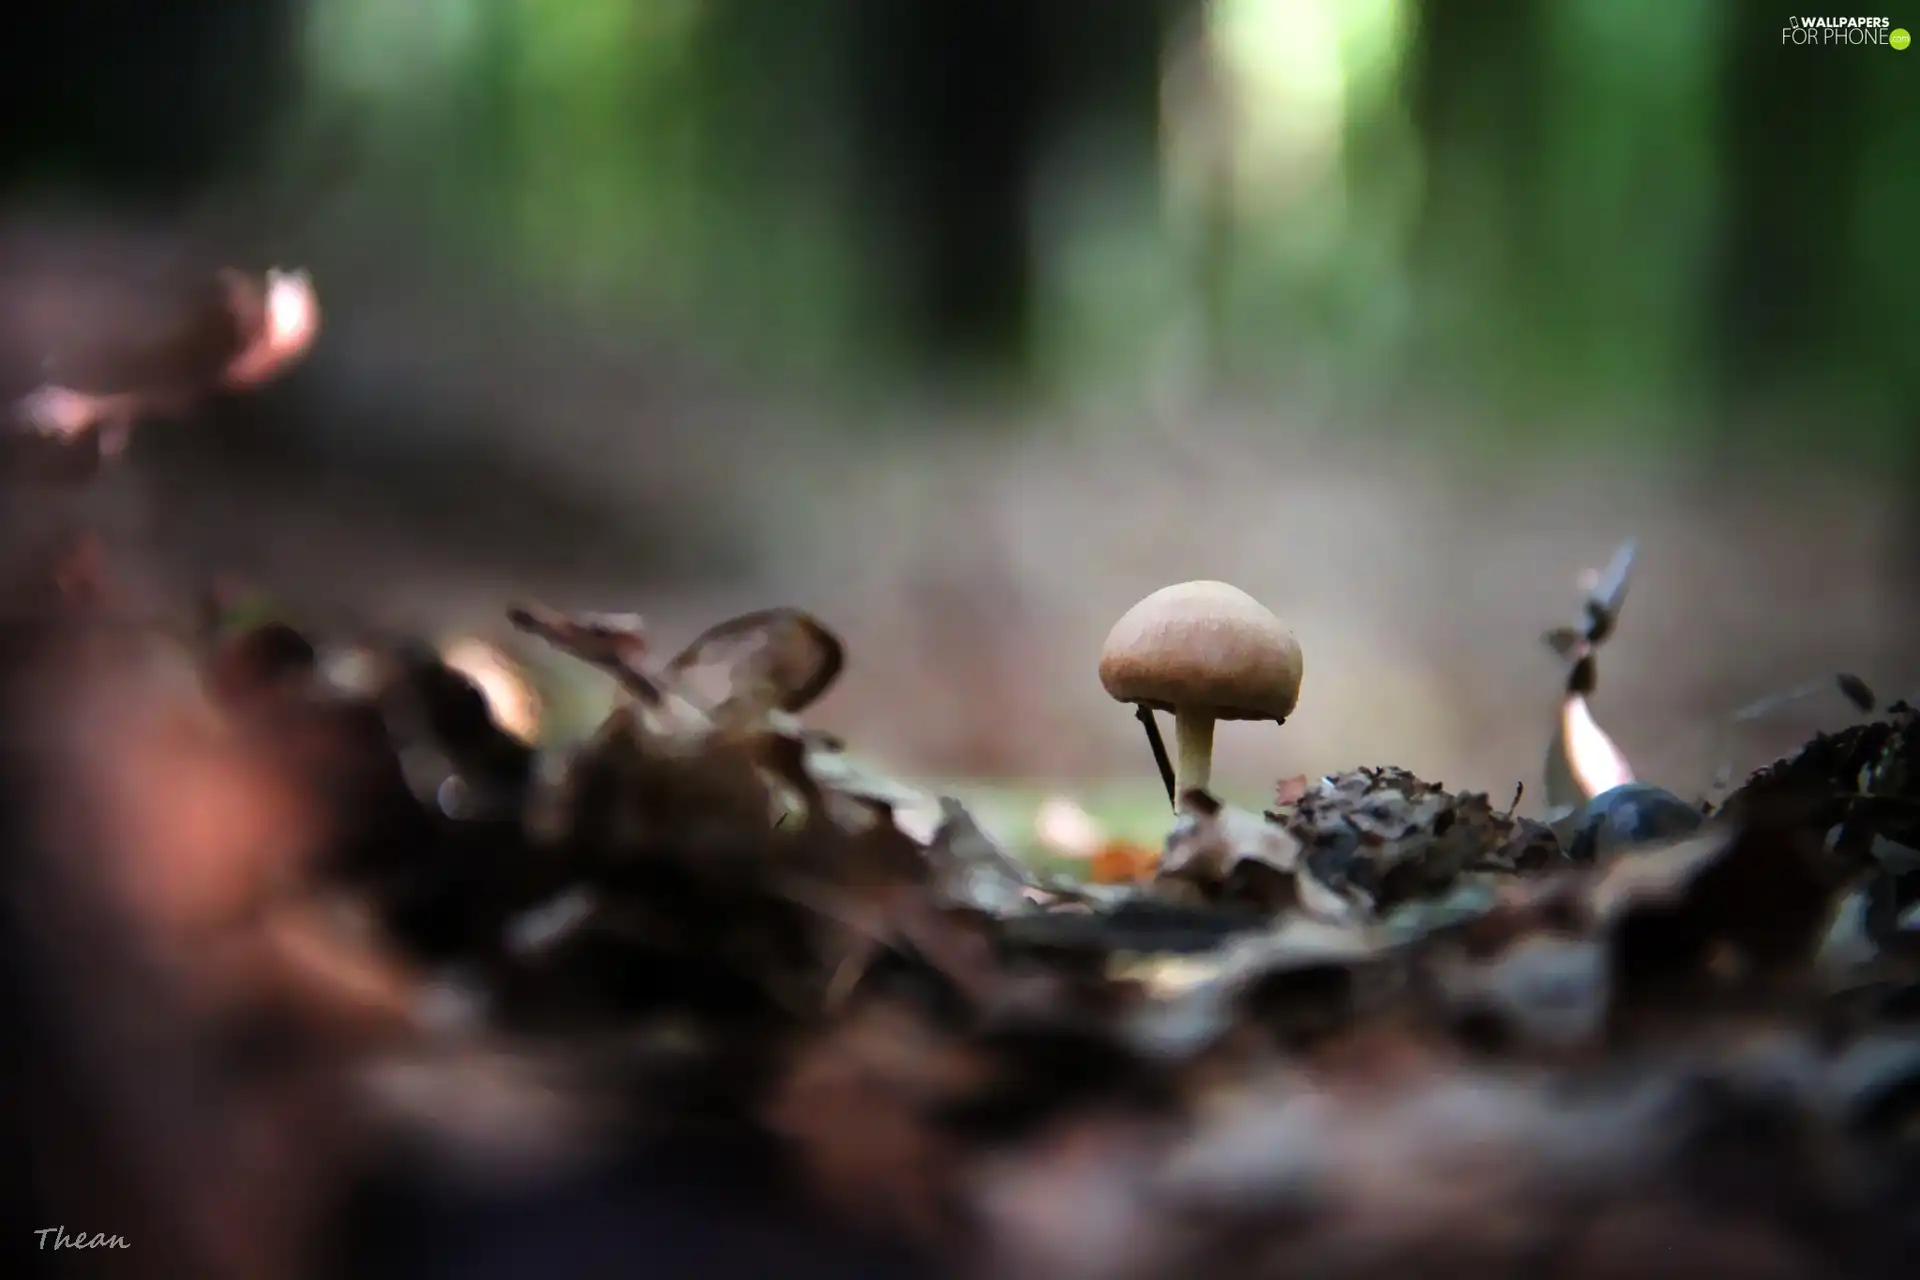 Little, Hat, leg, mushroom